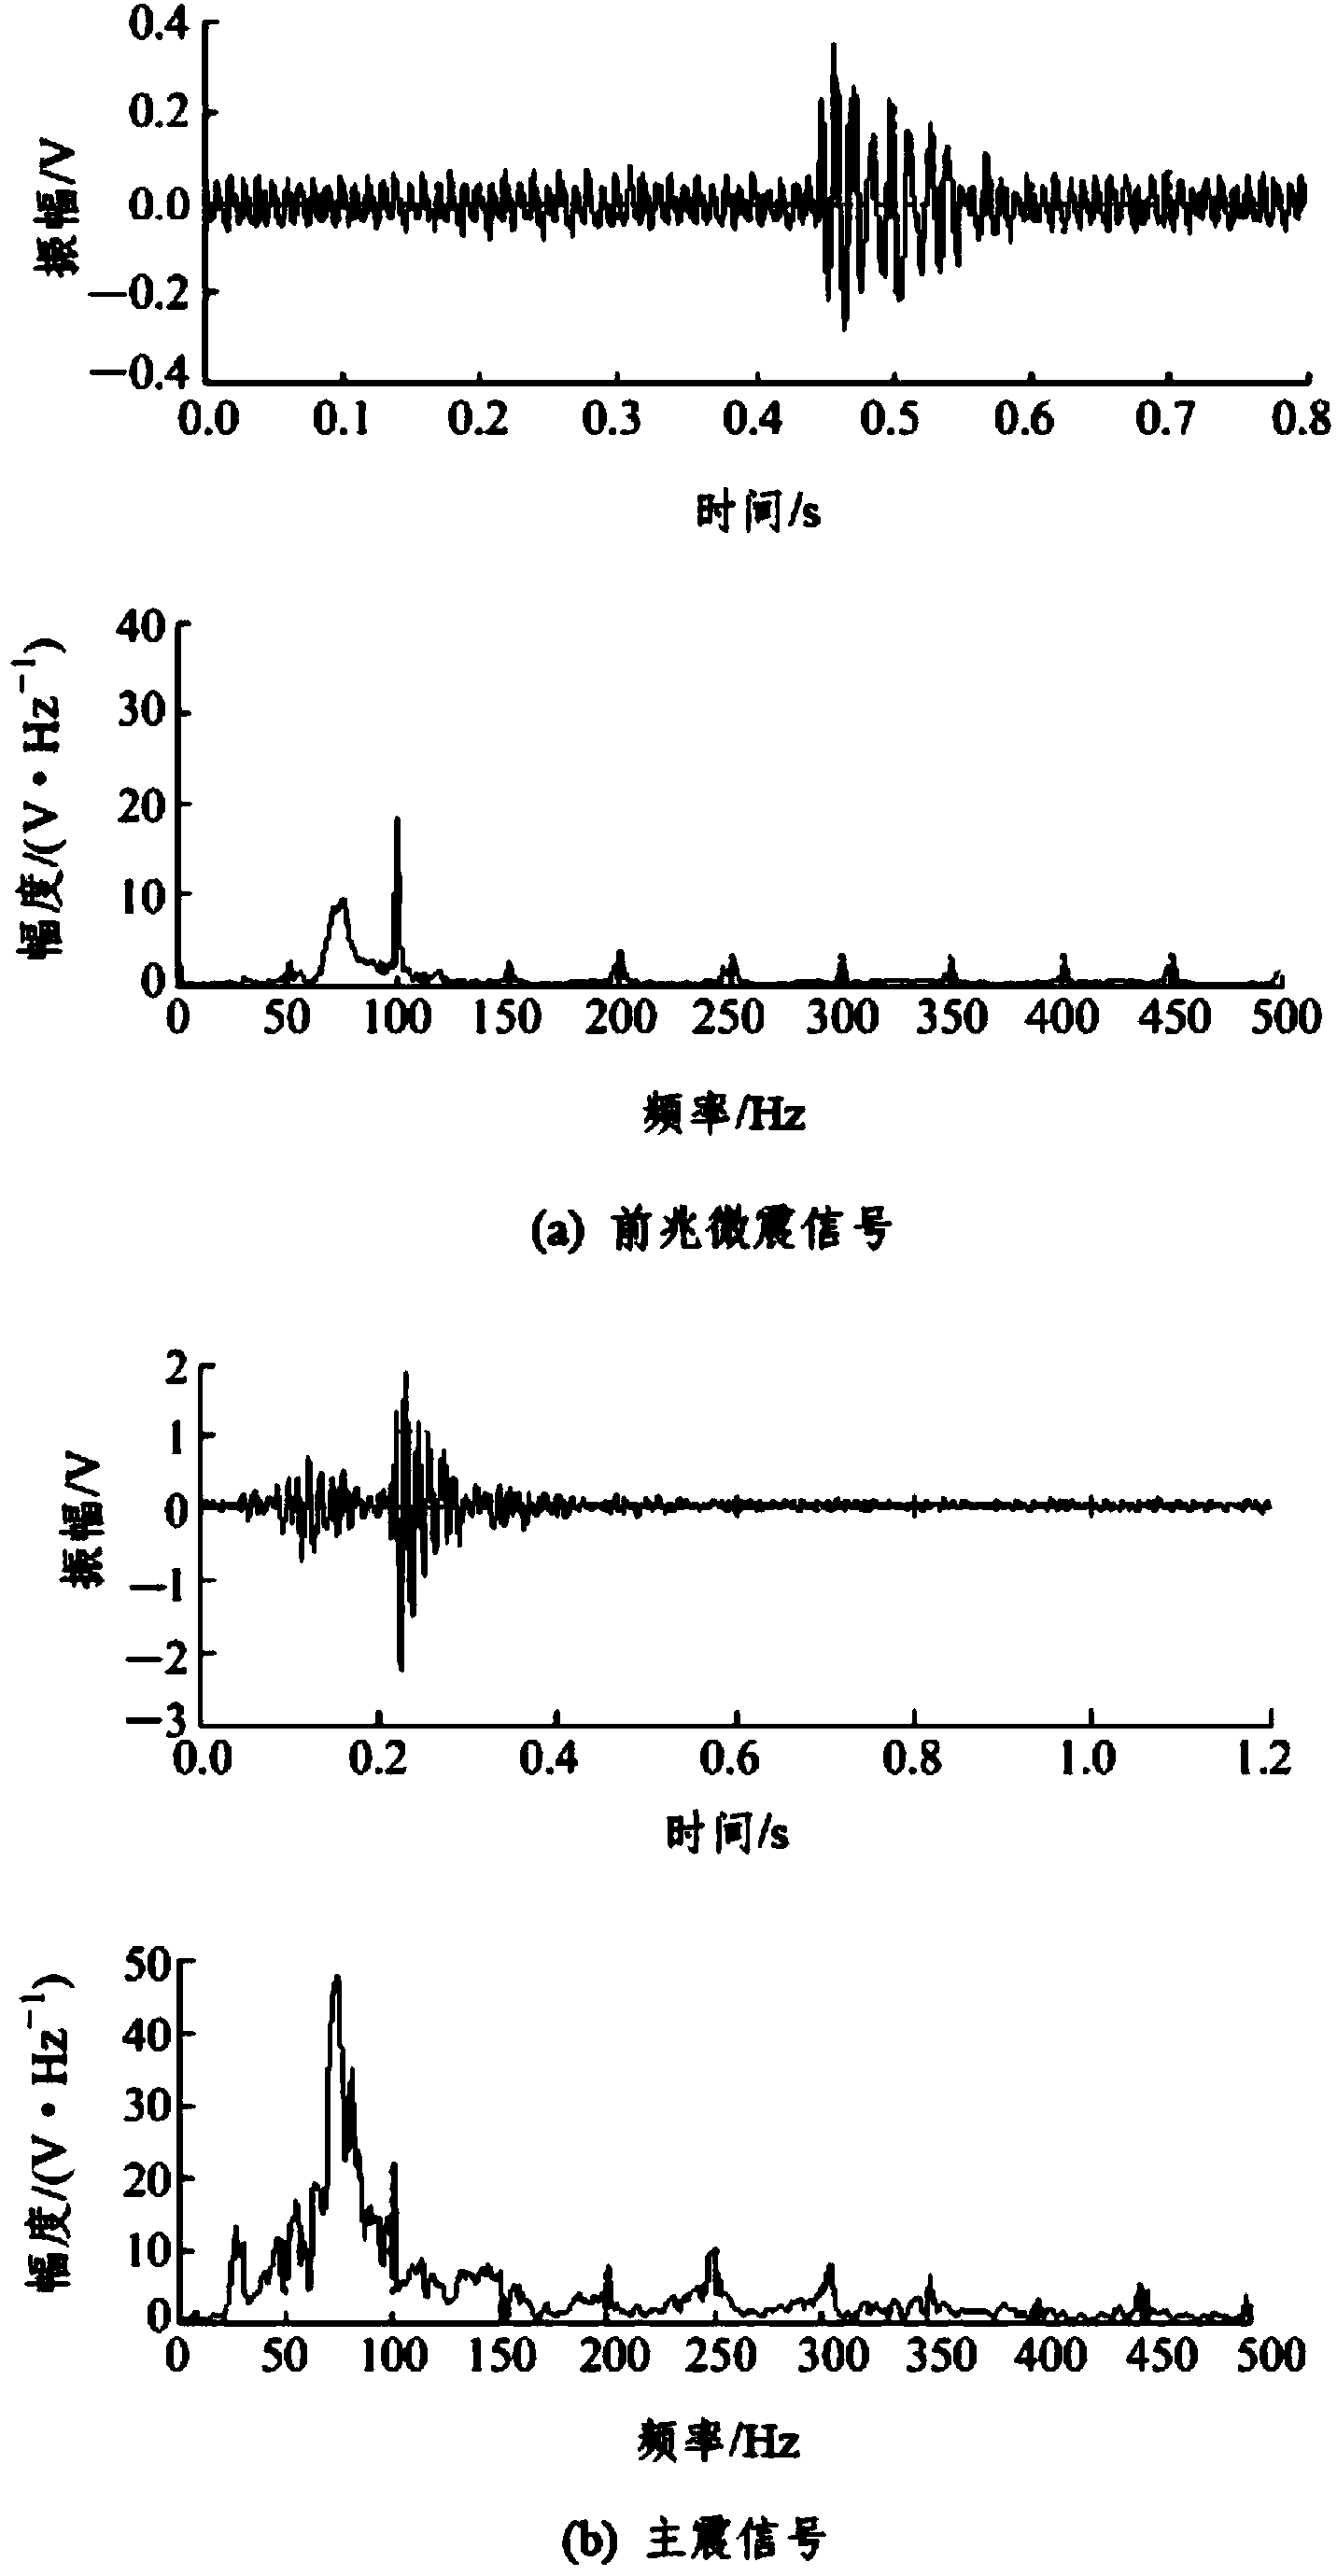 Rock burst premonition identification method based on microearthquake frequency spectrum evolution